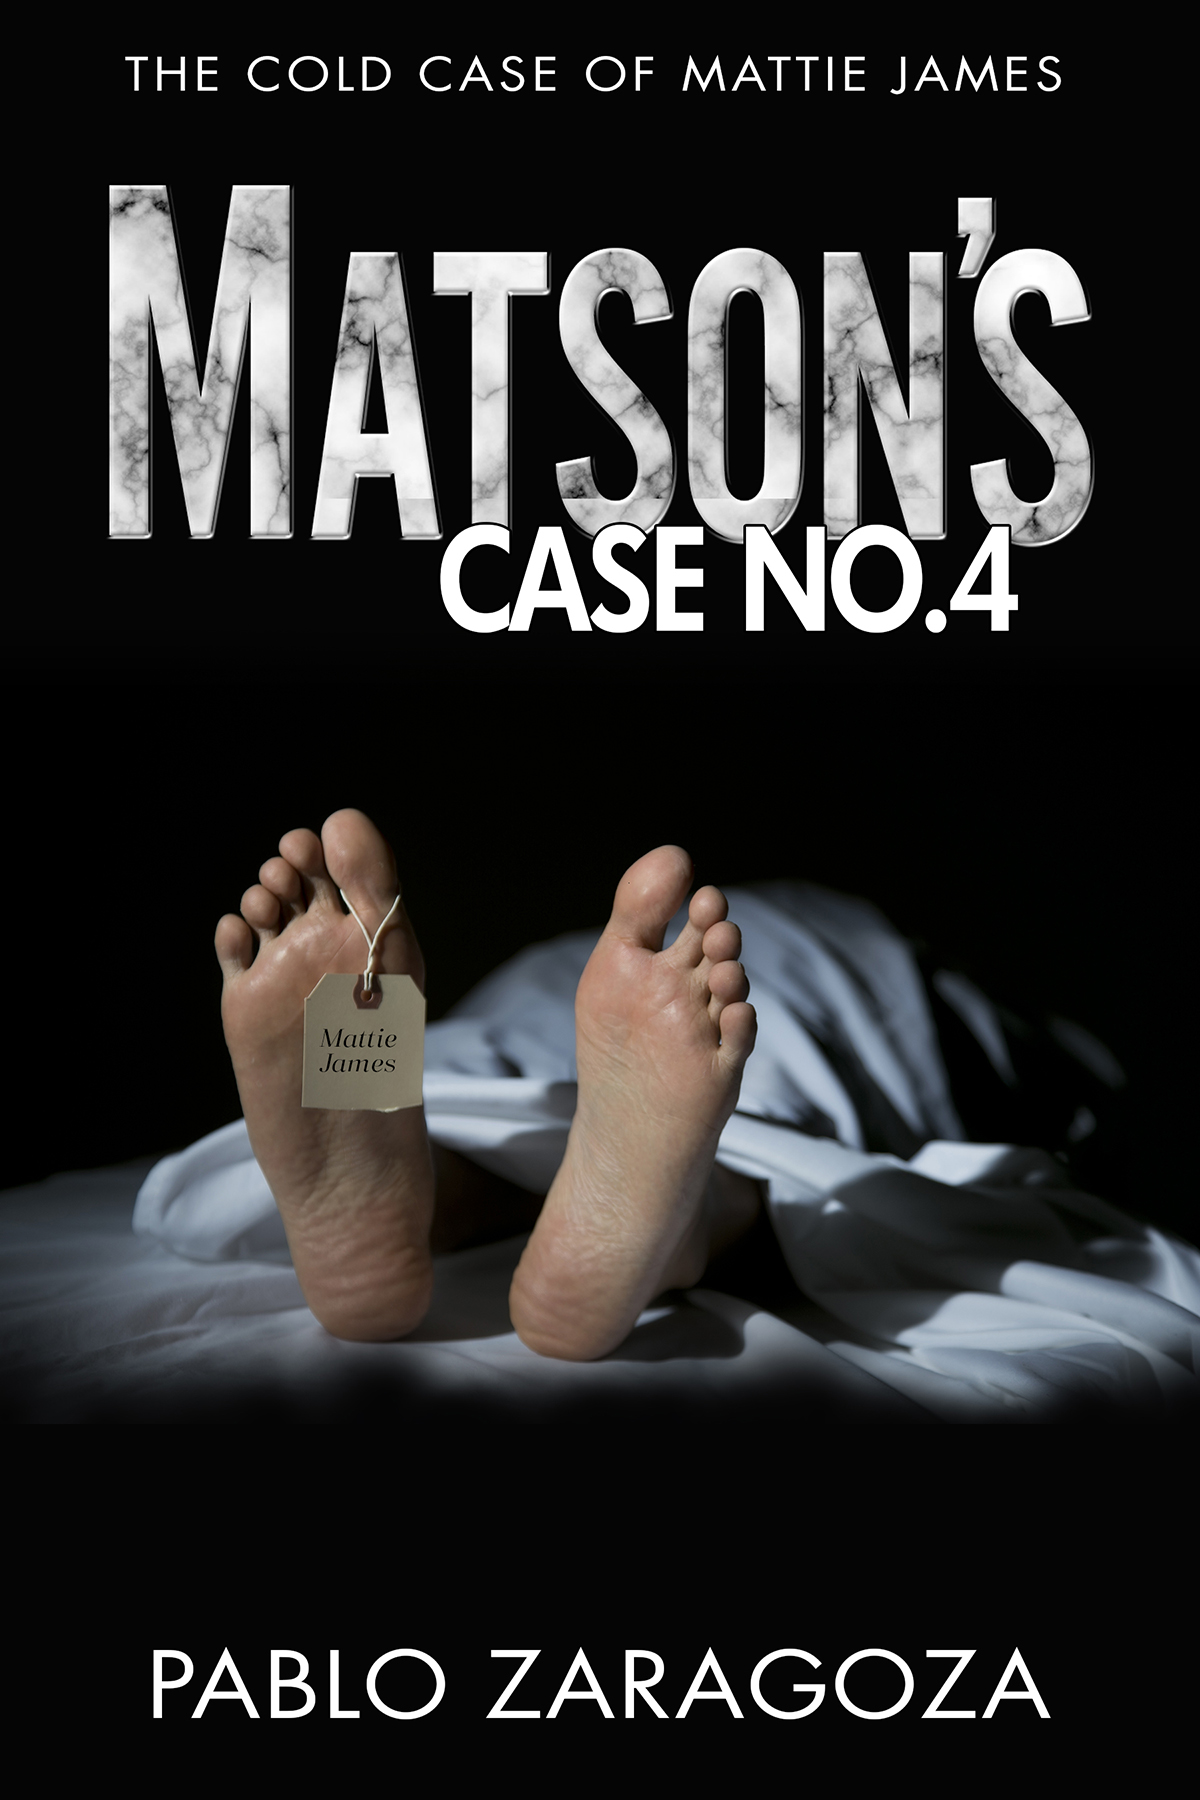 Matson's Case No. 4